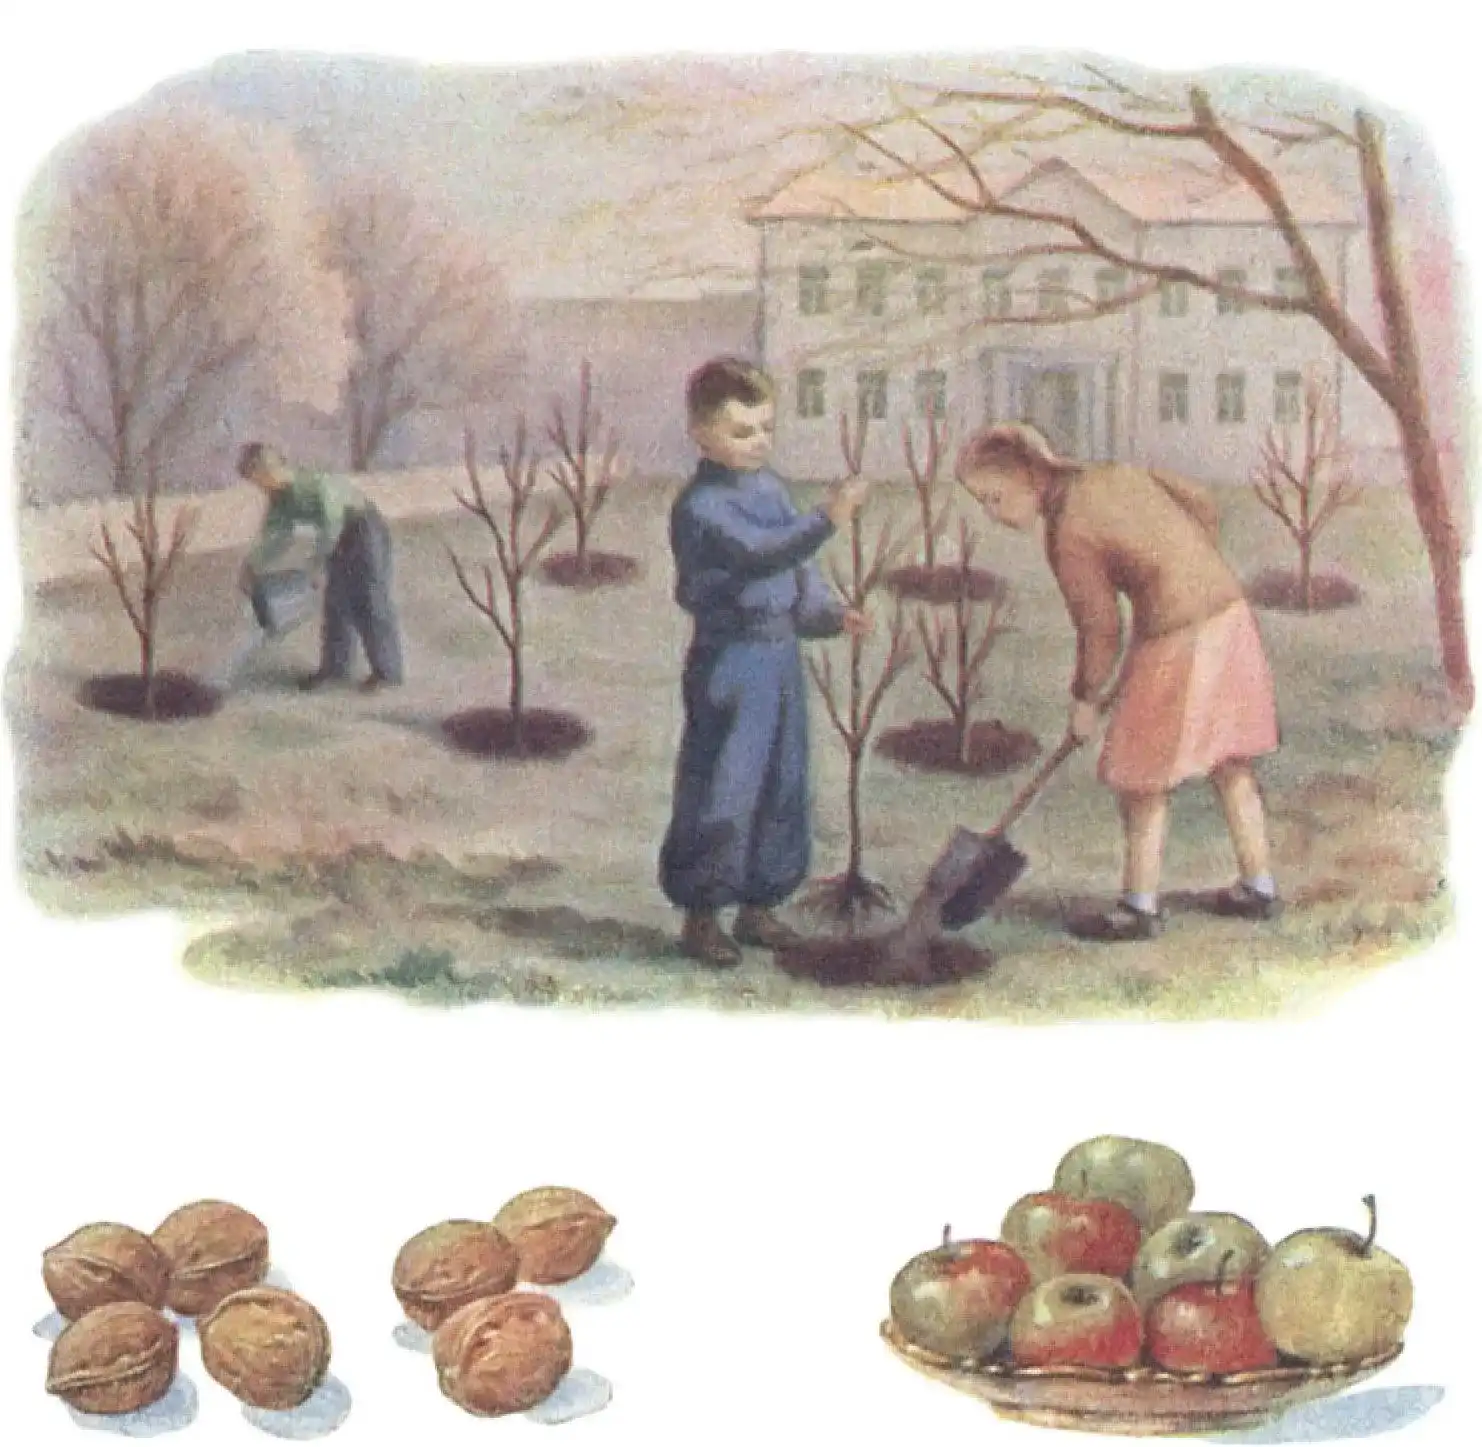 Children plant a tree